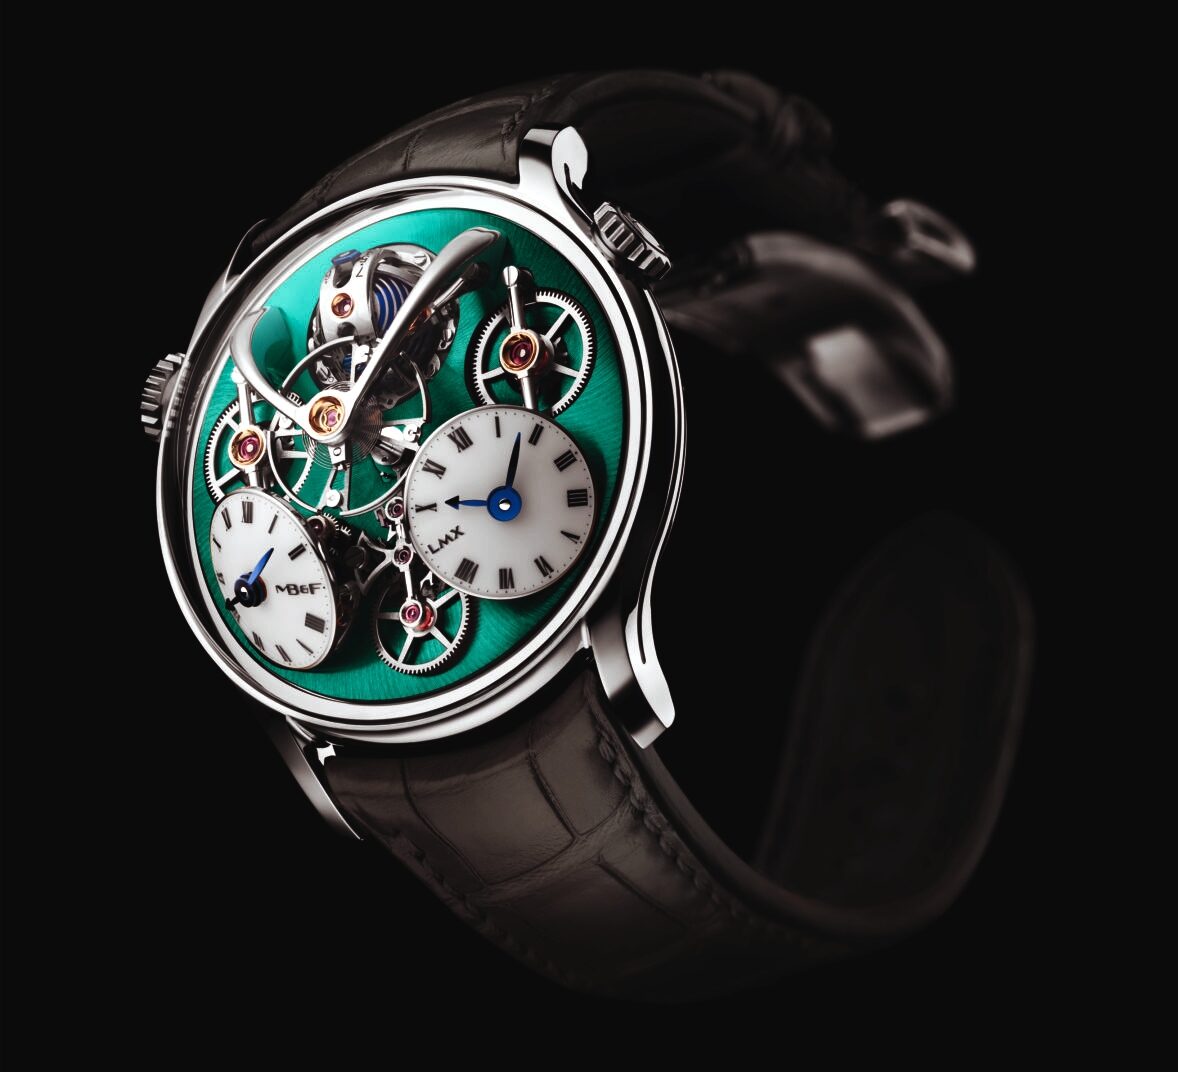 MBF LMX Titanium winning watch of the Mens Complication Watch Prize 2021 1178x1440 1